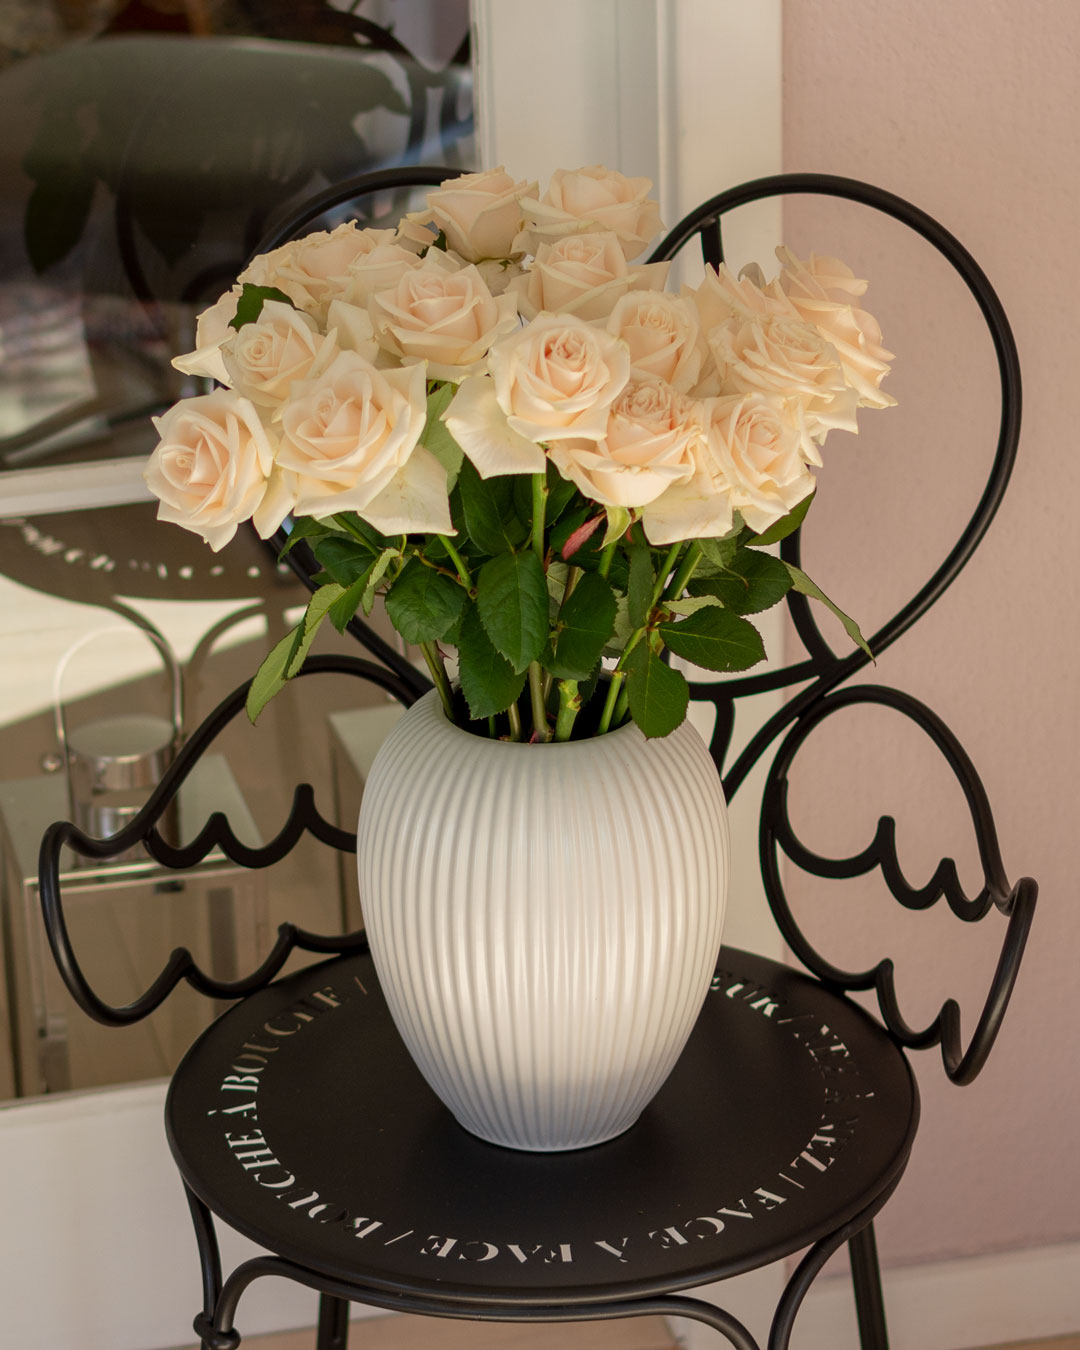 Hvid Michael Andersen Keramik vase Model 4767 med hvide roser på sort englestol